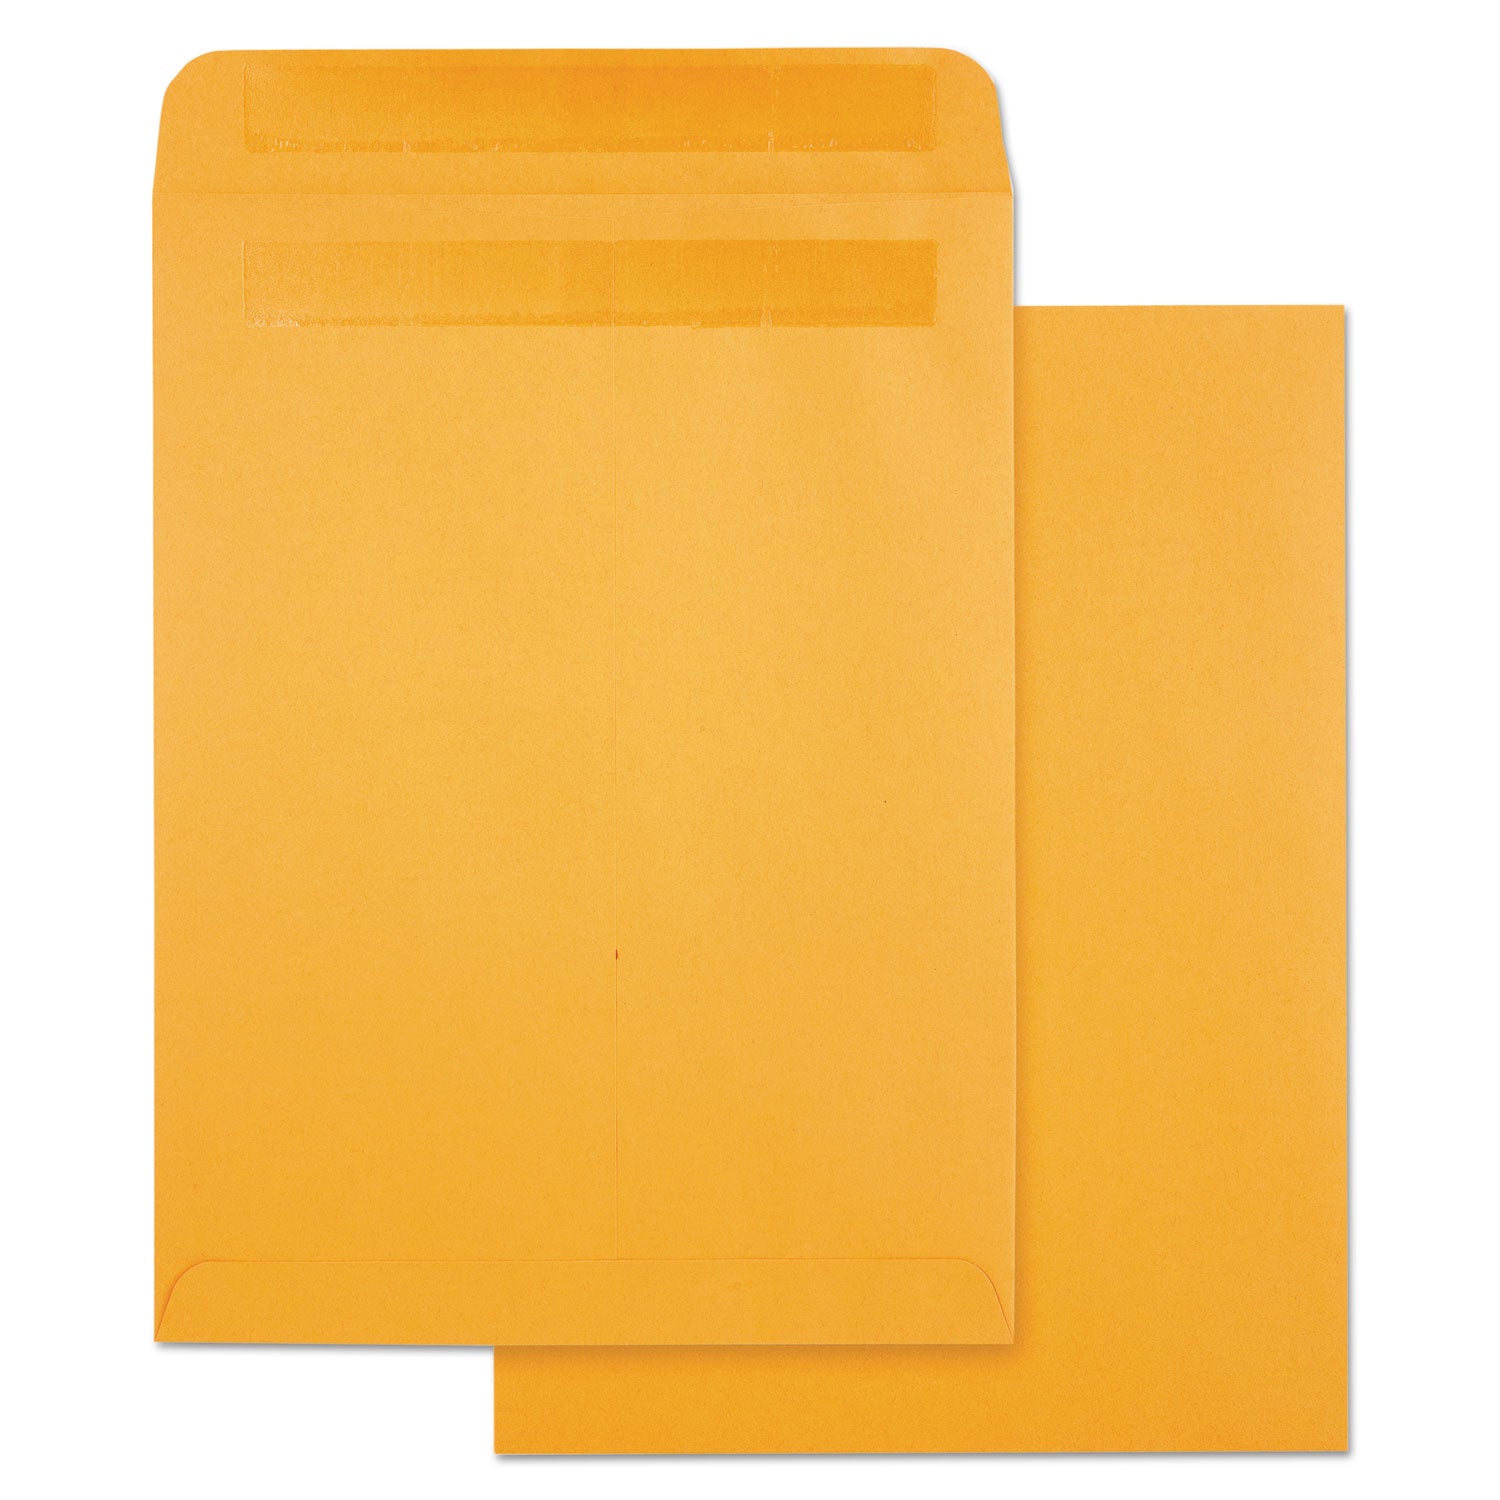 high-bulk-self-sealing-envelopes-#10-1-2-cheese-blade-flap-redi-seal-adhesive-closure-9-x-12-brown-kraft-100-box_qua43563 - 1